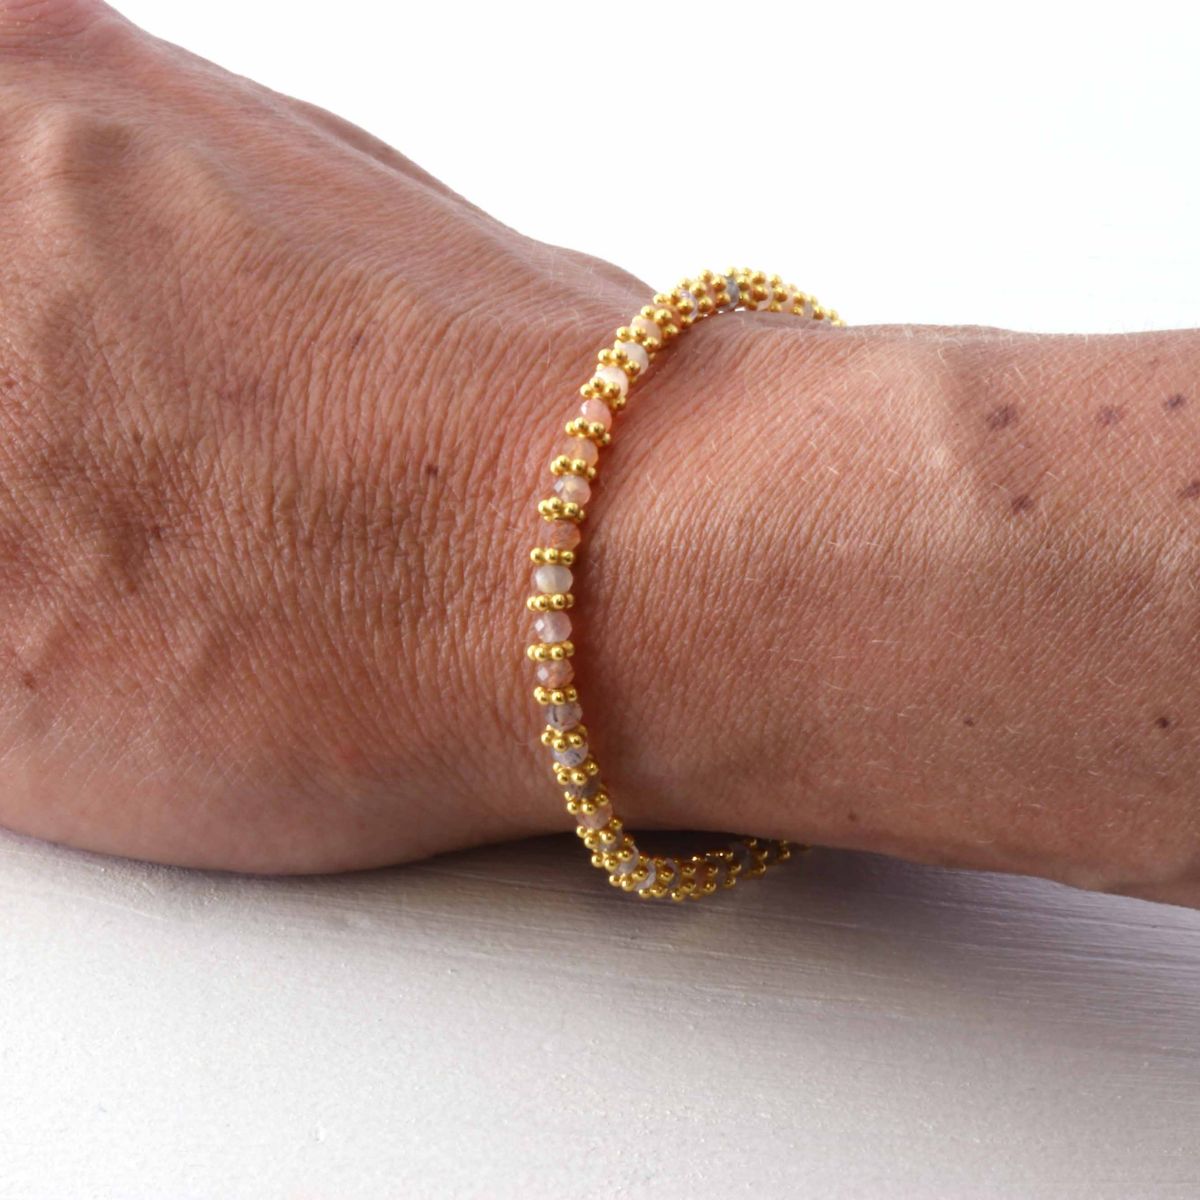 peach moonstone bracelet on a woman's wrist